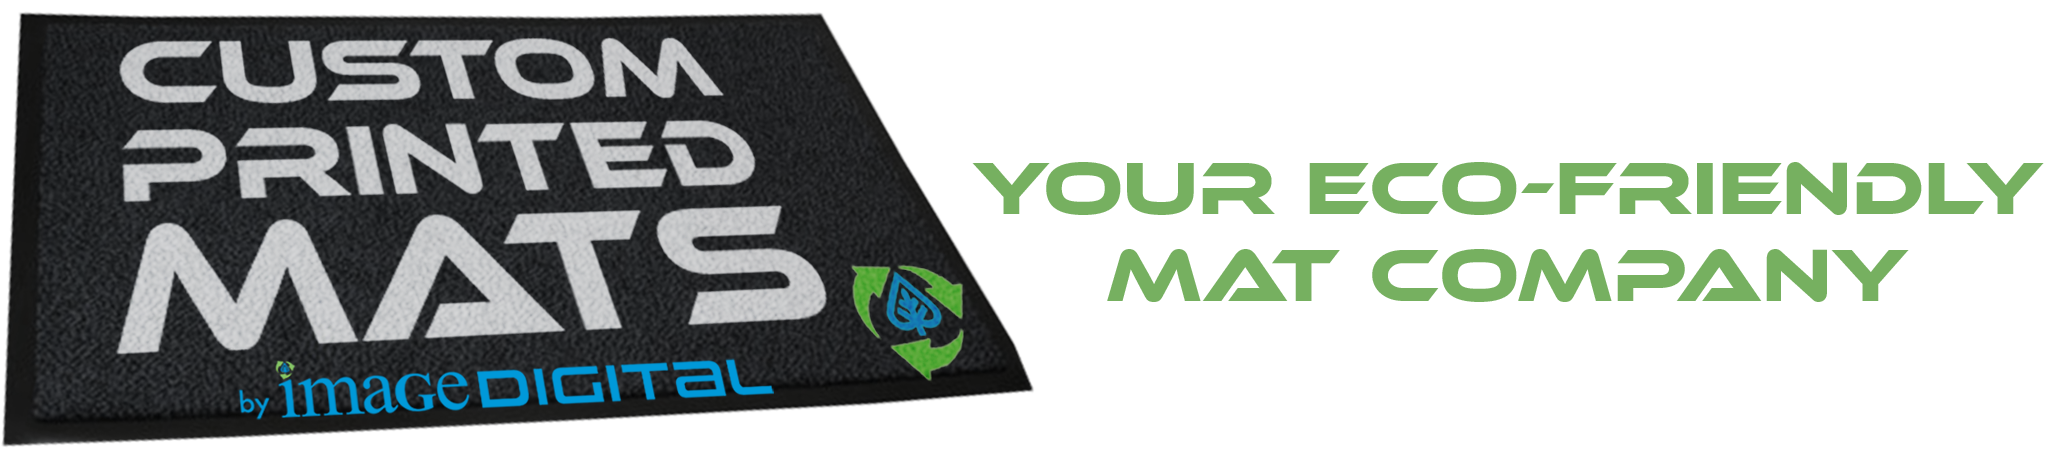 Custom Printed Mats – Your eco-friendly mat company